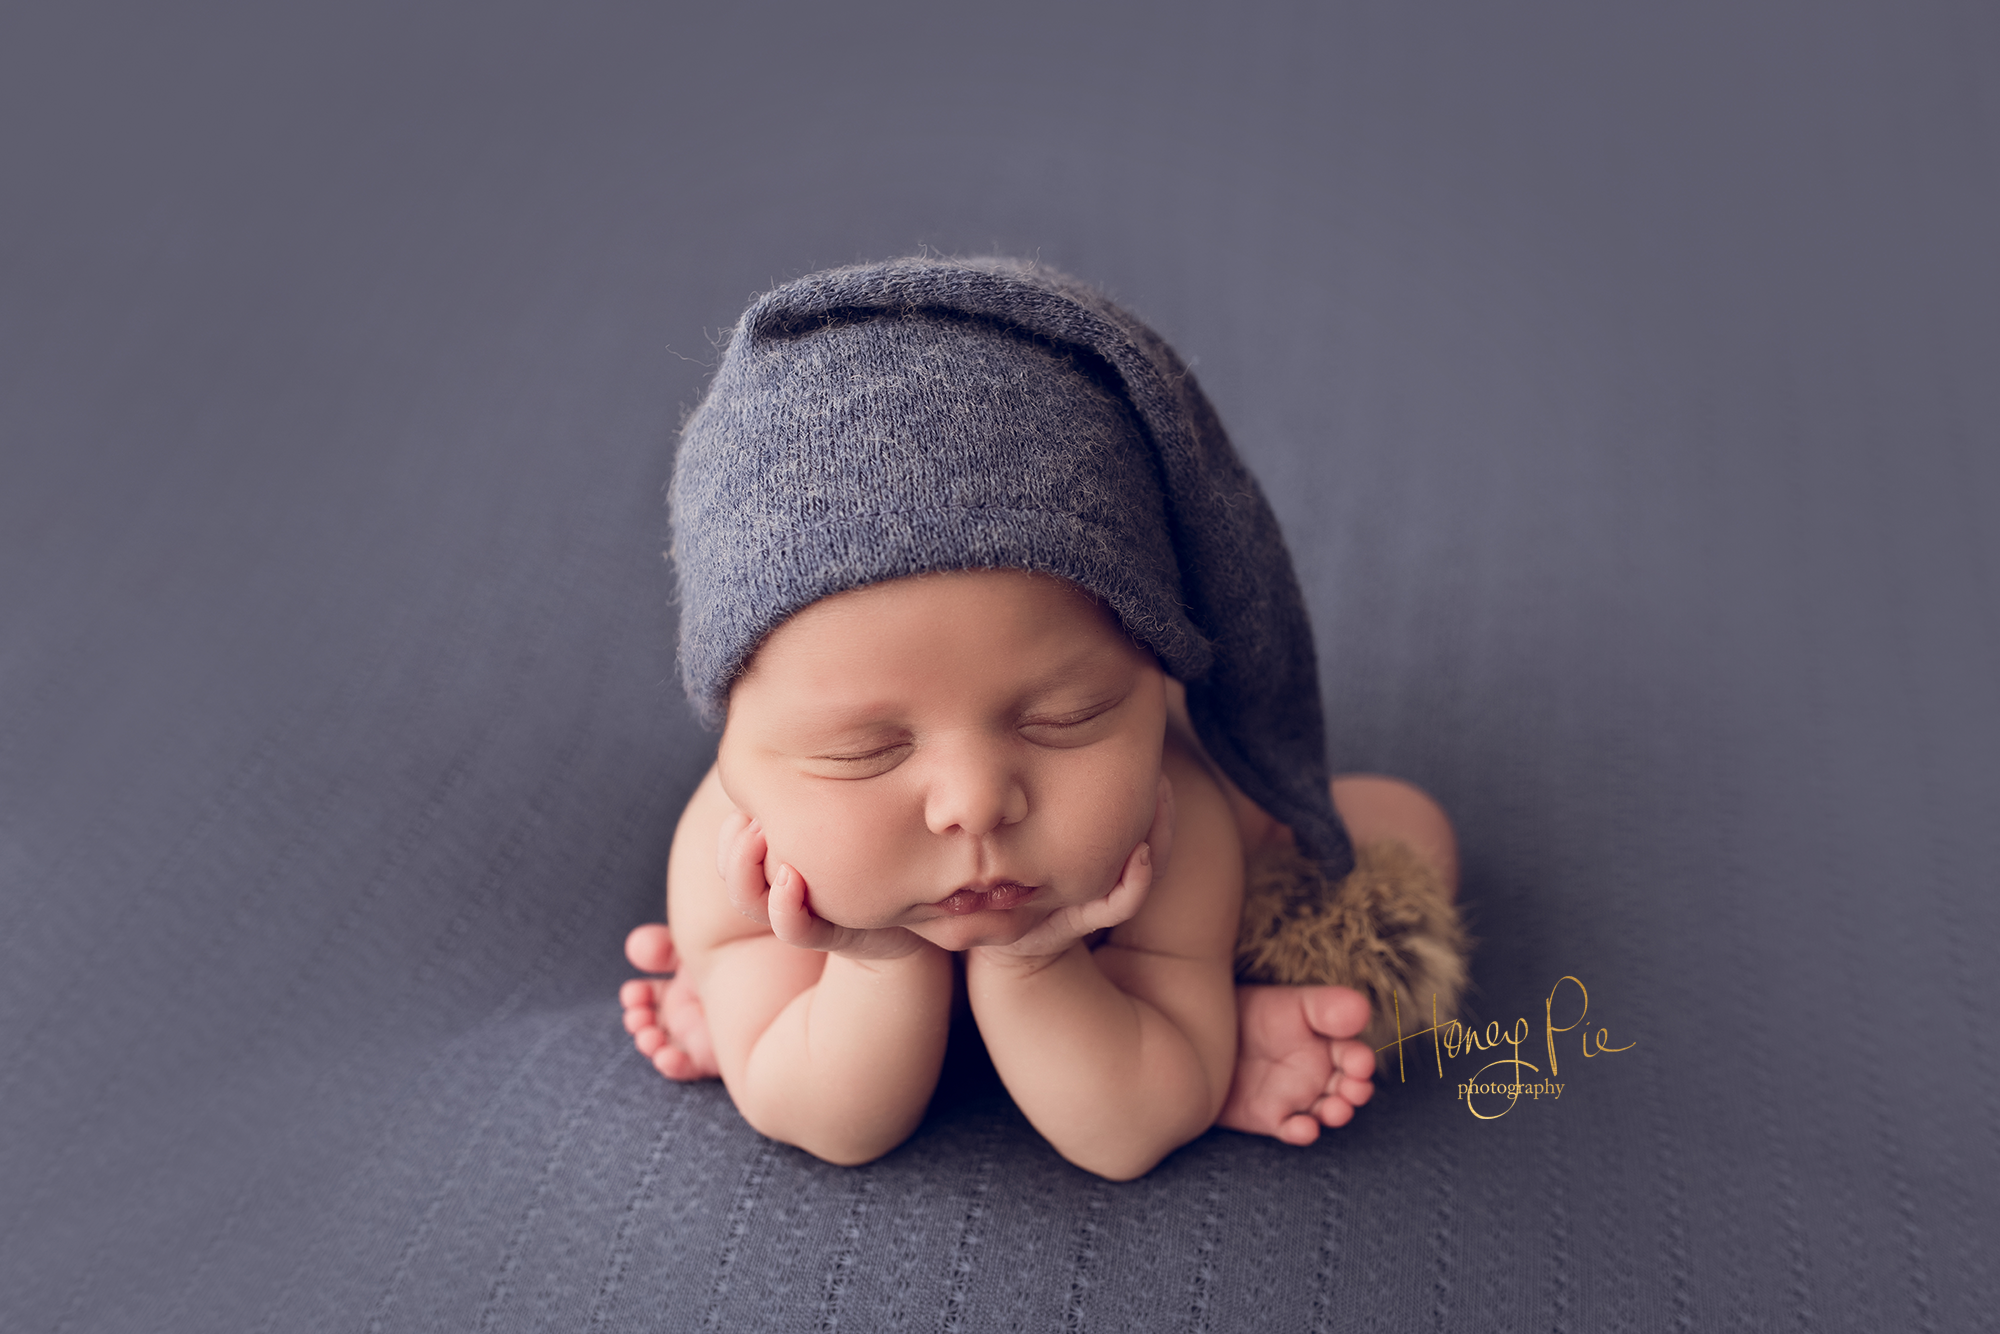 Newborn fast asleep in froggie pose during his newborn photoshoot